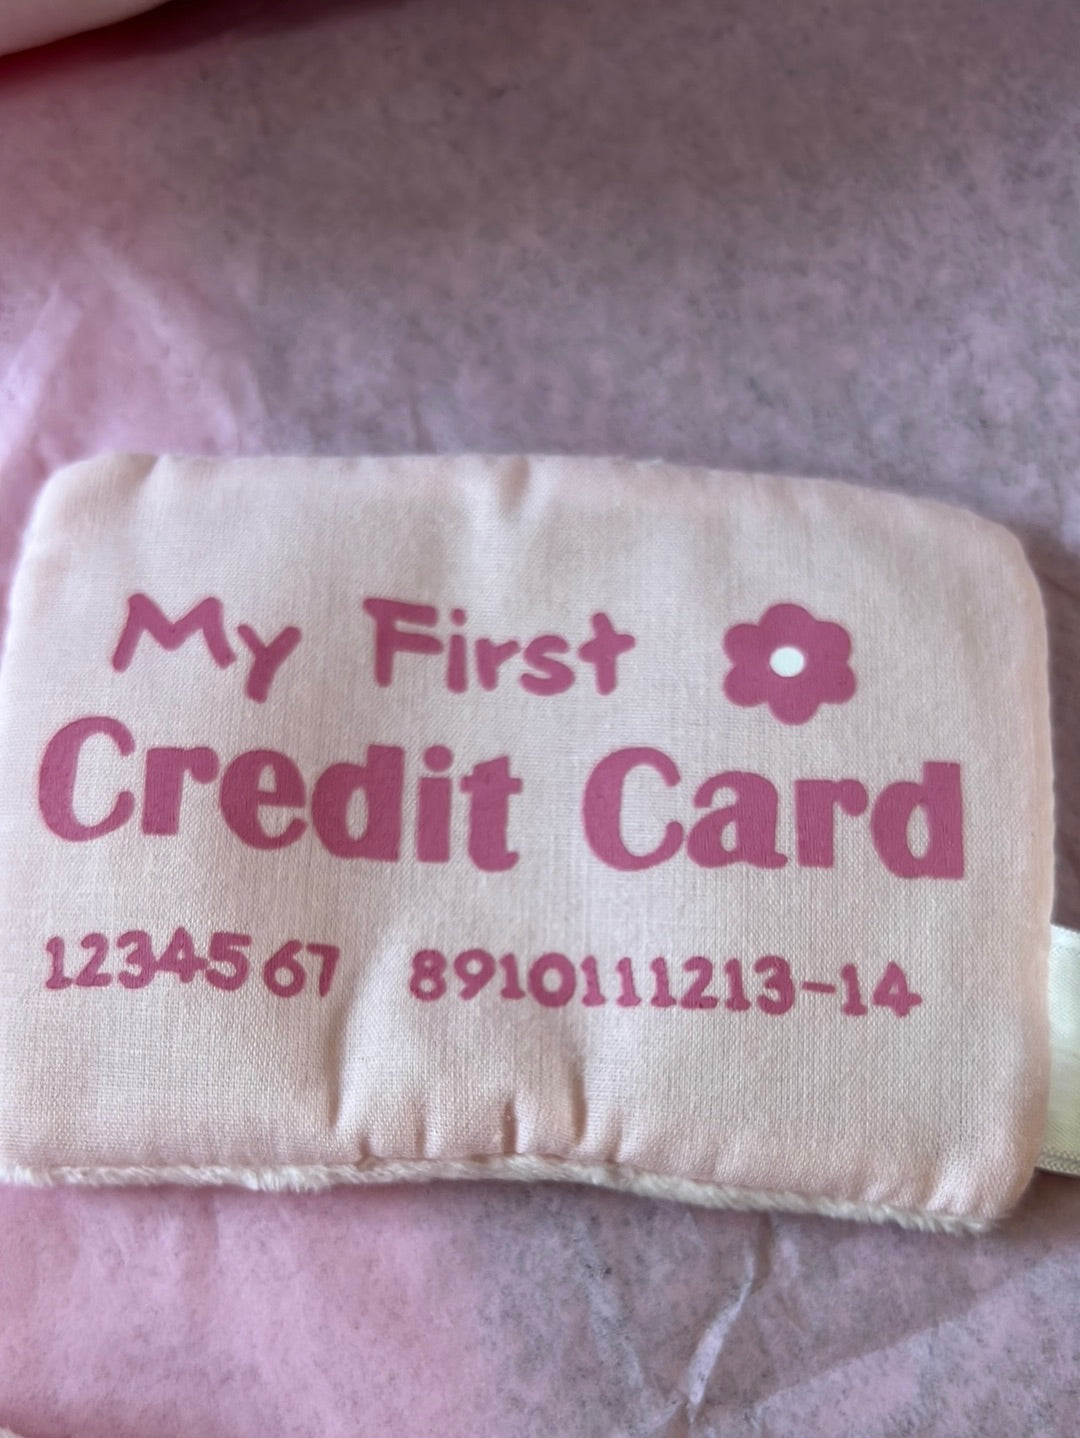 My First Purse - Kids Pretend Toy Hand Bag w/ Play Phone, Keys, Mirror |  Pink | eBay